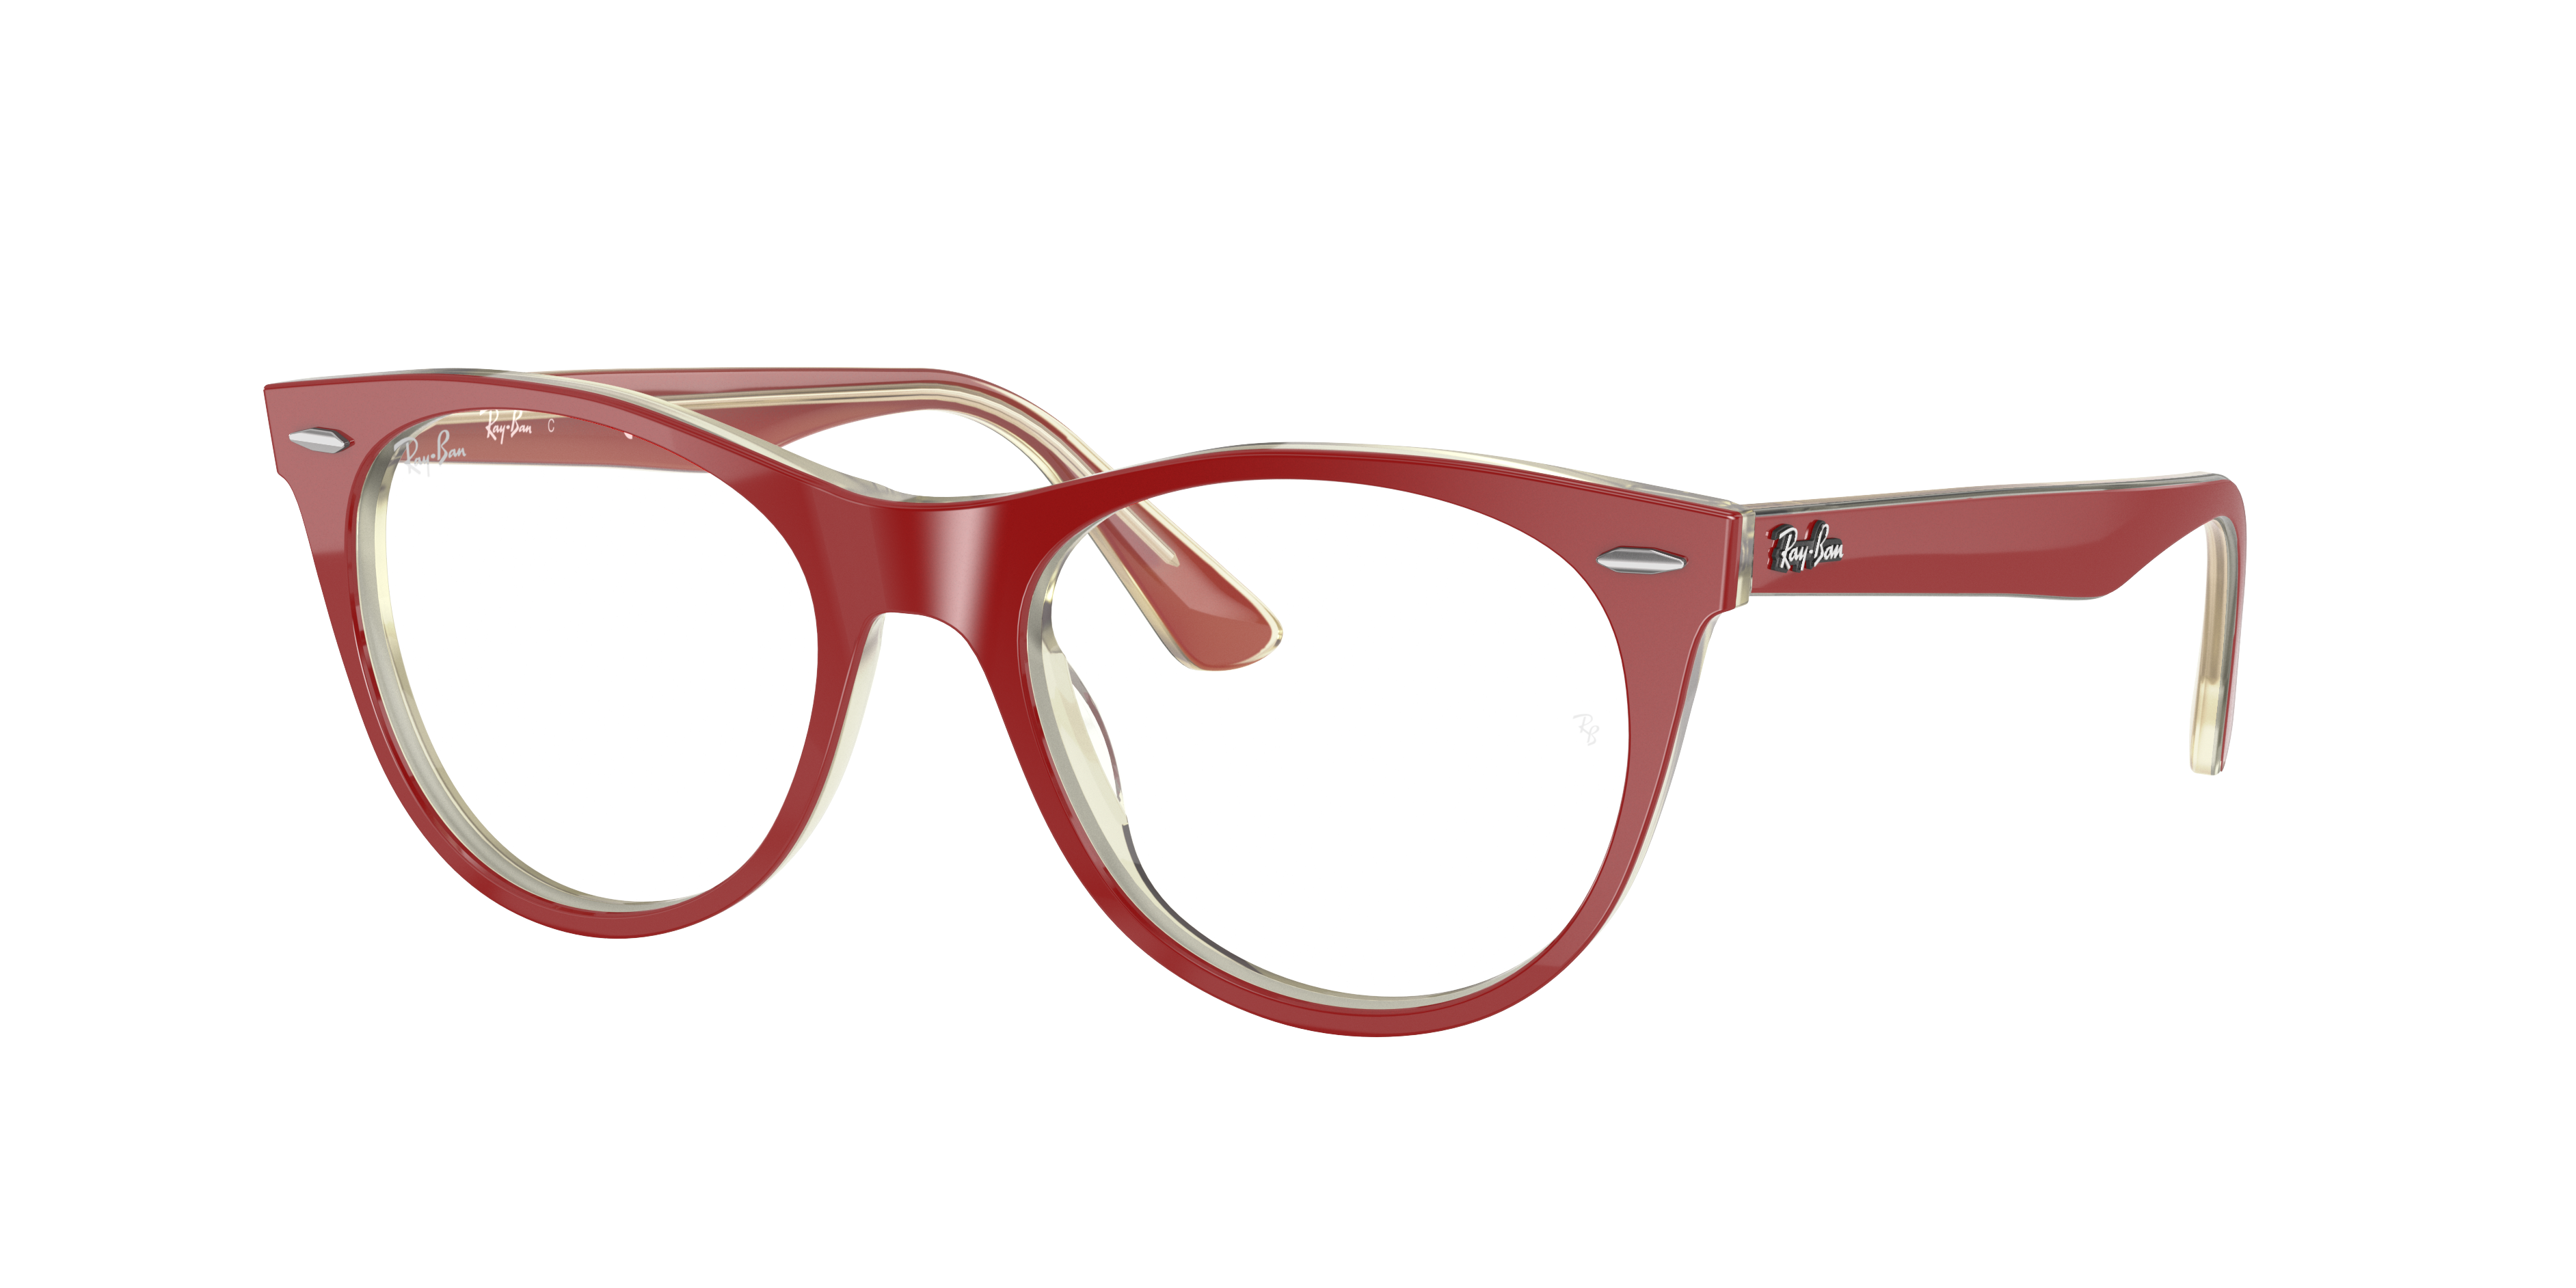 Wayfarer Ii Optics Eyeglasses with Red Frame | Ray-Ban®